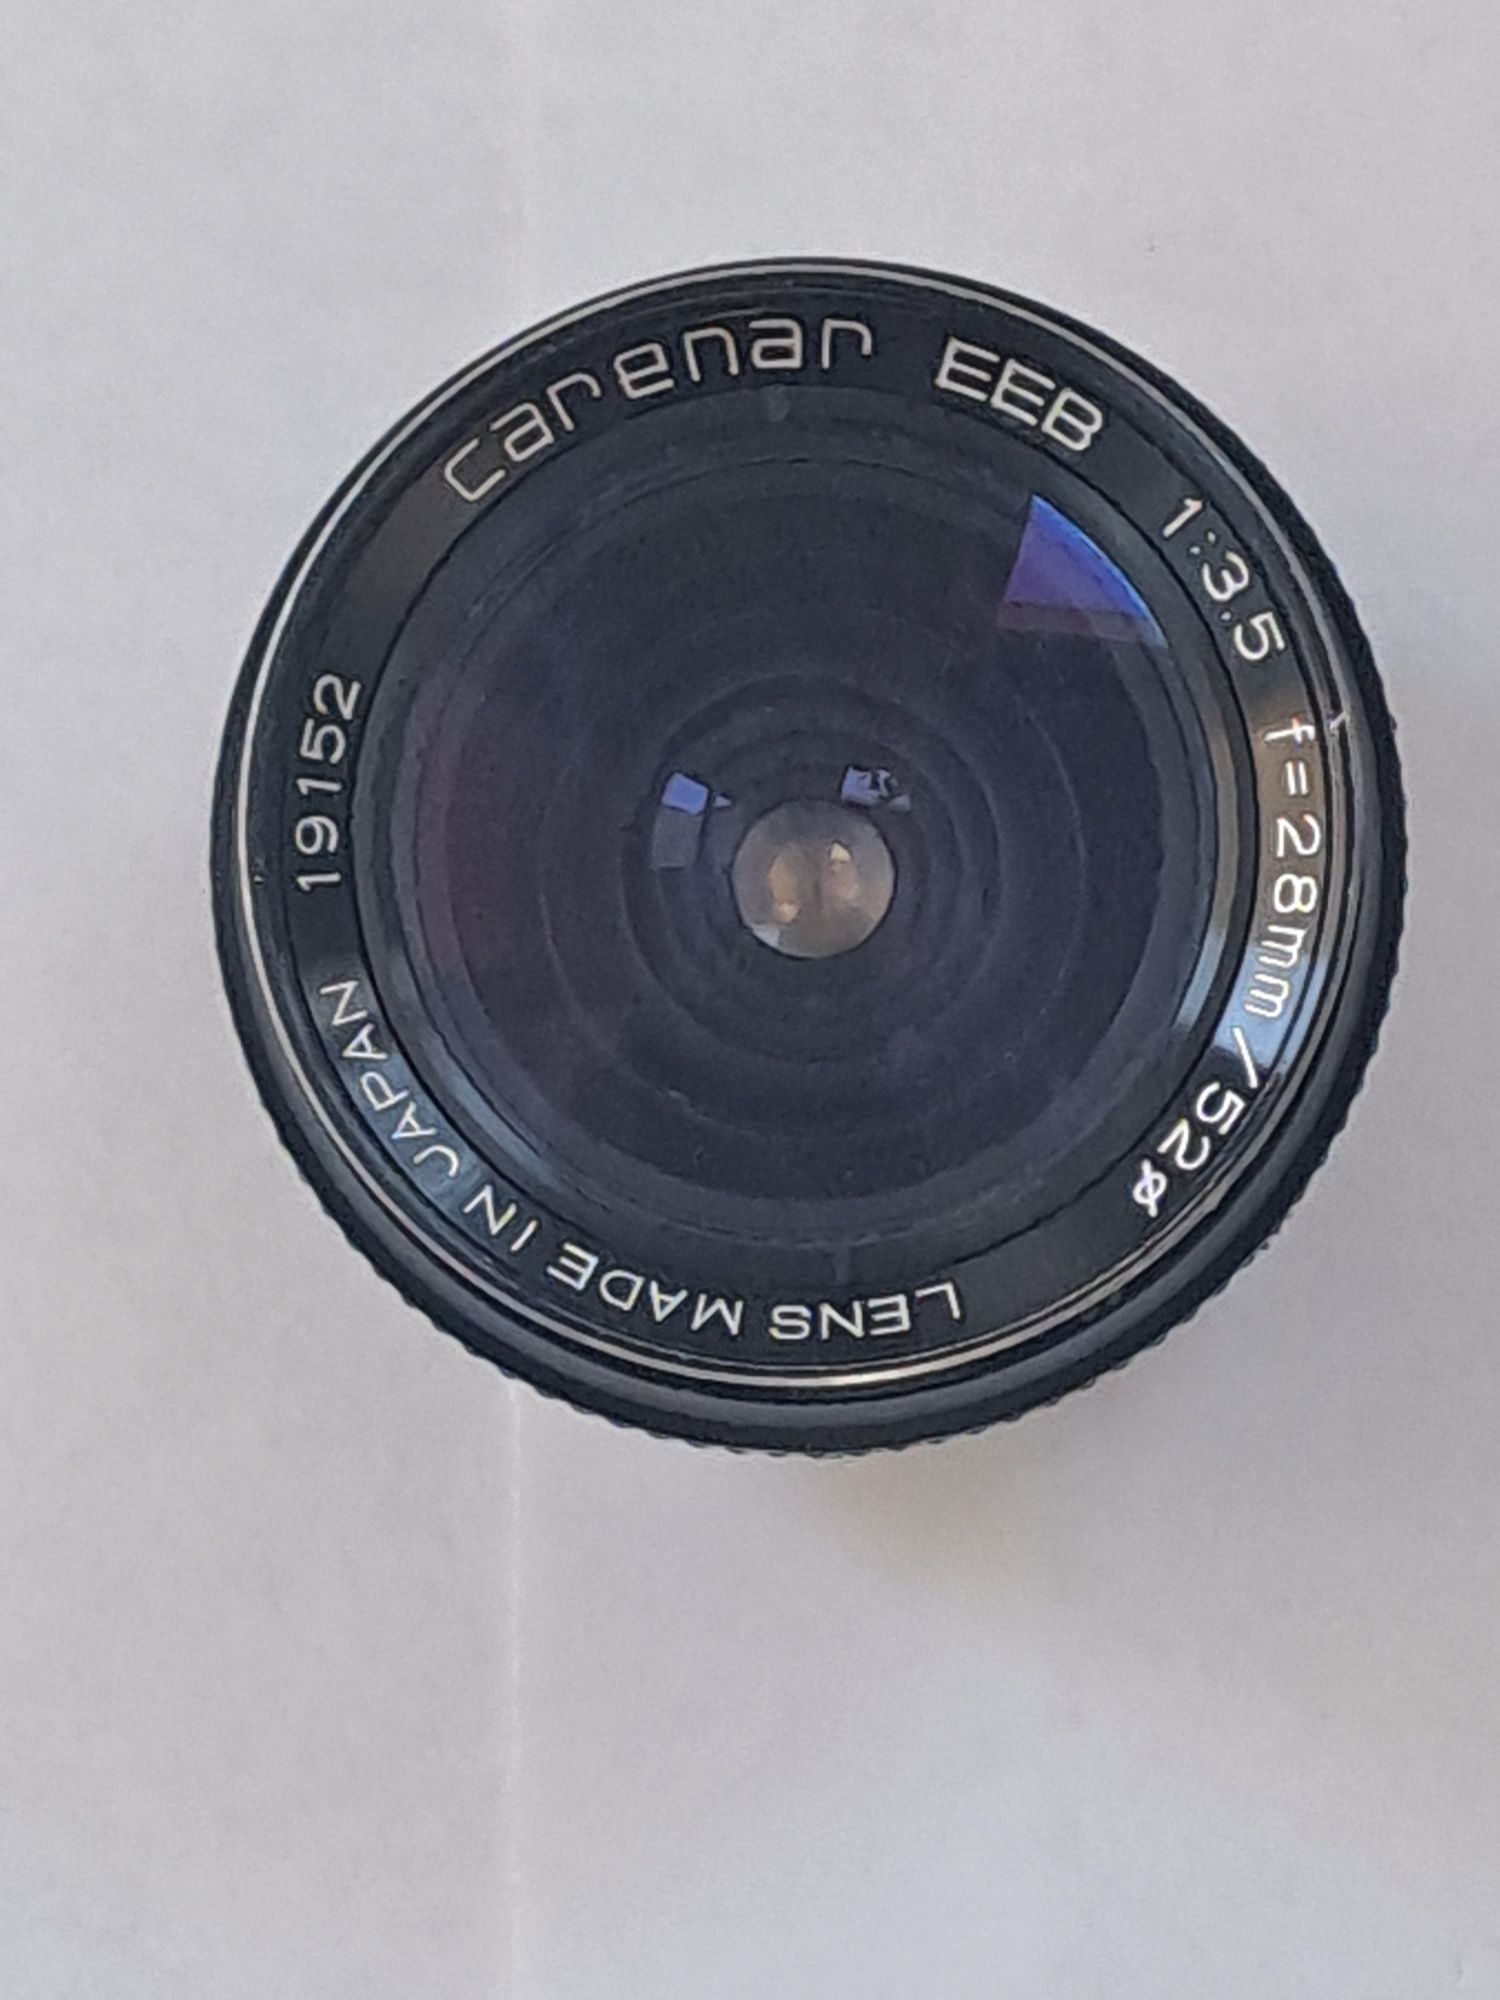 Obiektyw Carenar EEB 1:3.5 f=28mm/52 (18)